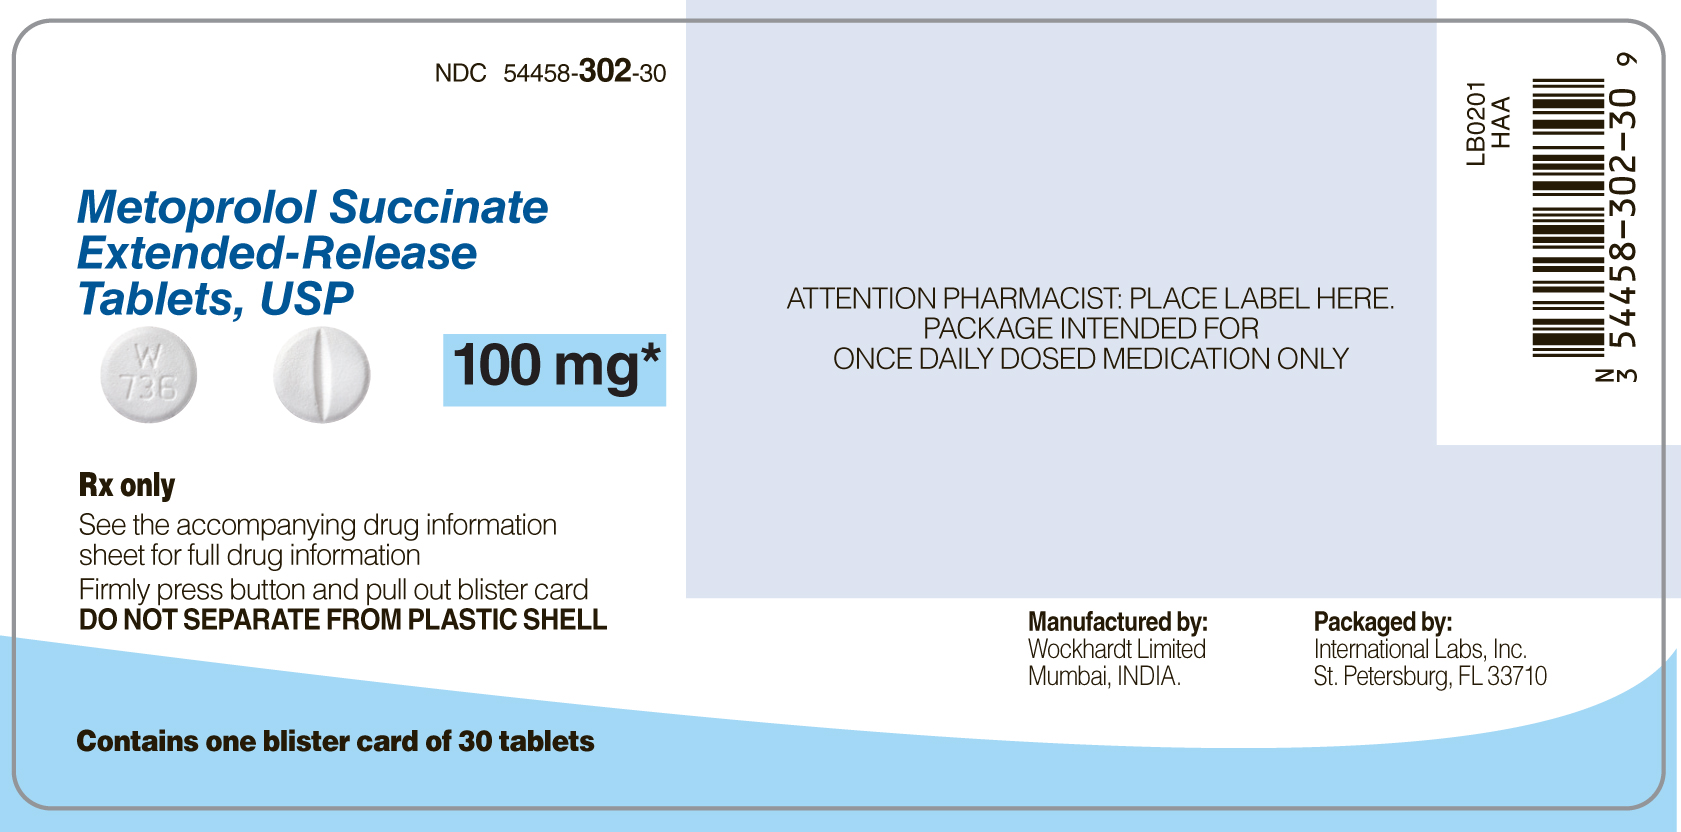 Metroprolol Succinate E-R 100 mg front